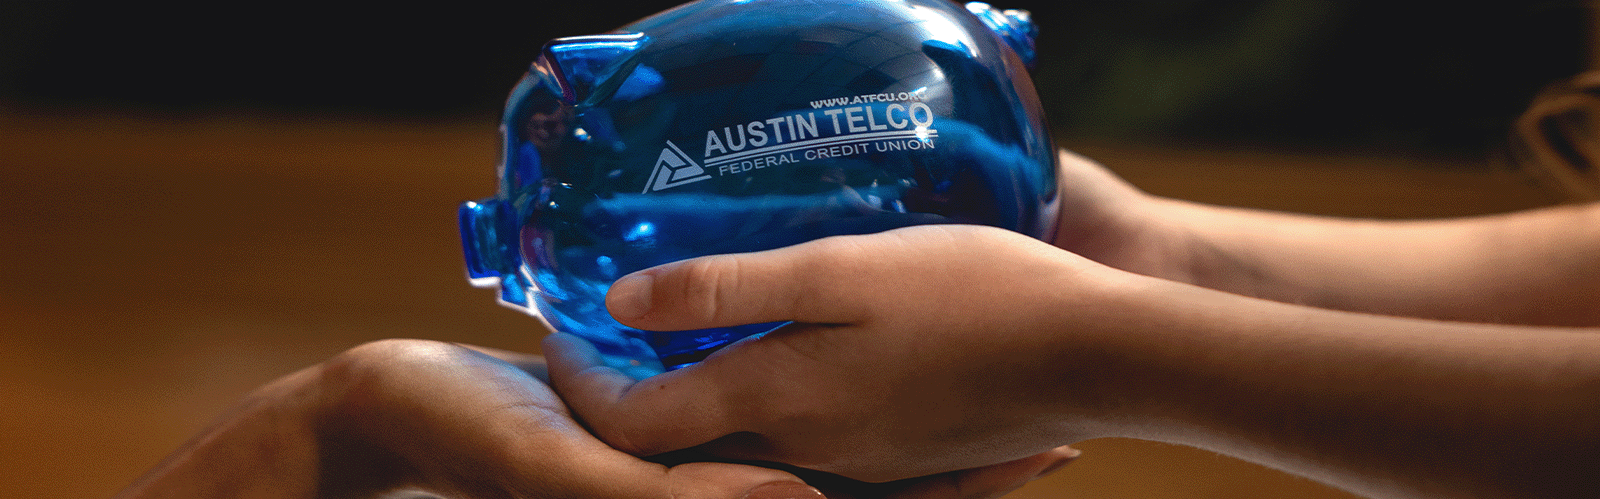 Austin Telco piggy bank